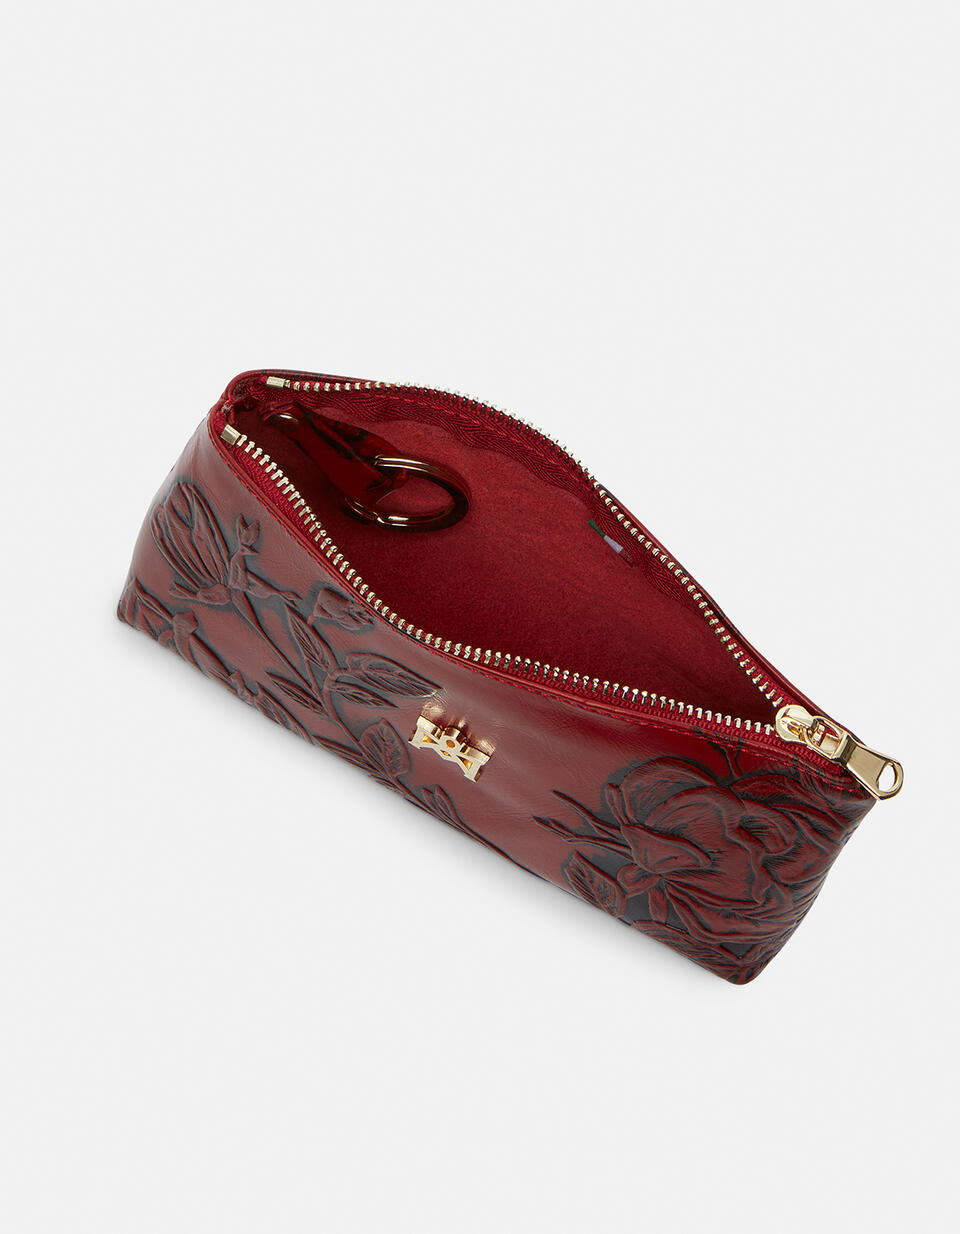 Large purse - Key holders - Women's Accessories | Accessories ROSSO - Key holders - Women's Accessories | AccessoriesCuoieria Fiorentina